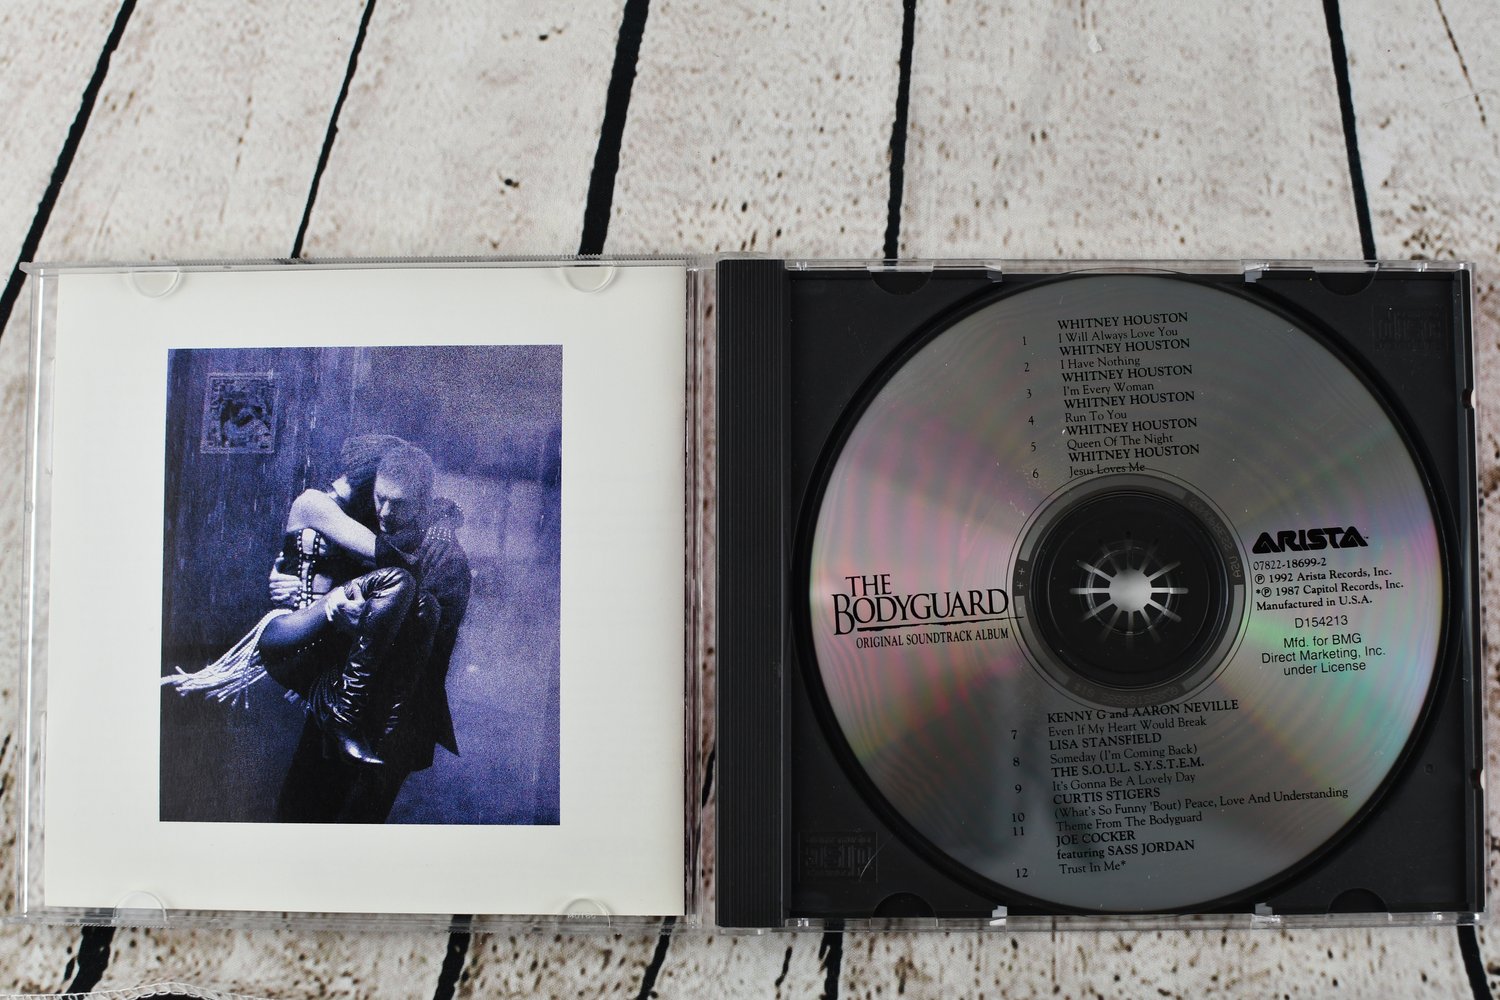 The Bodyguard Original Soundtrack Album(Vinyl LP  